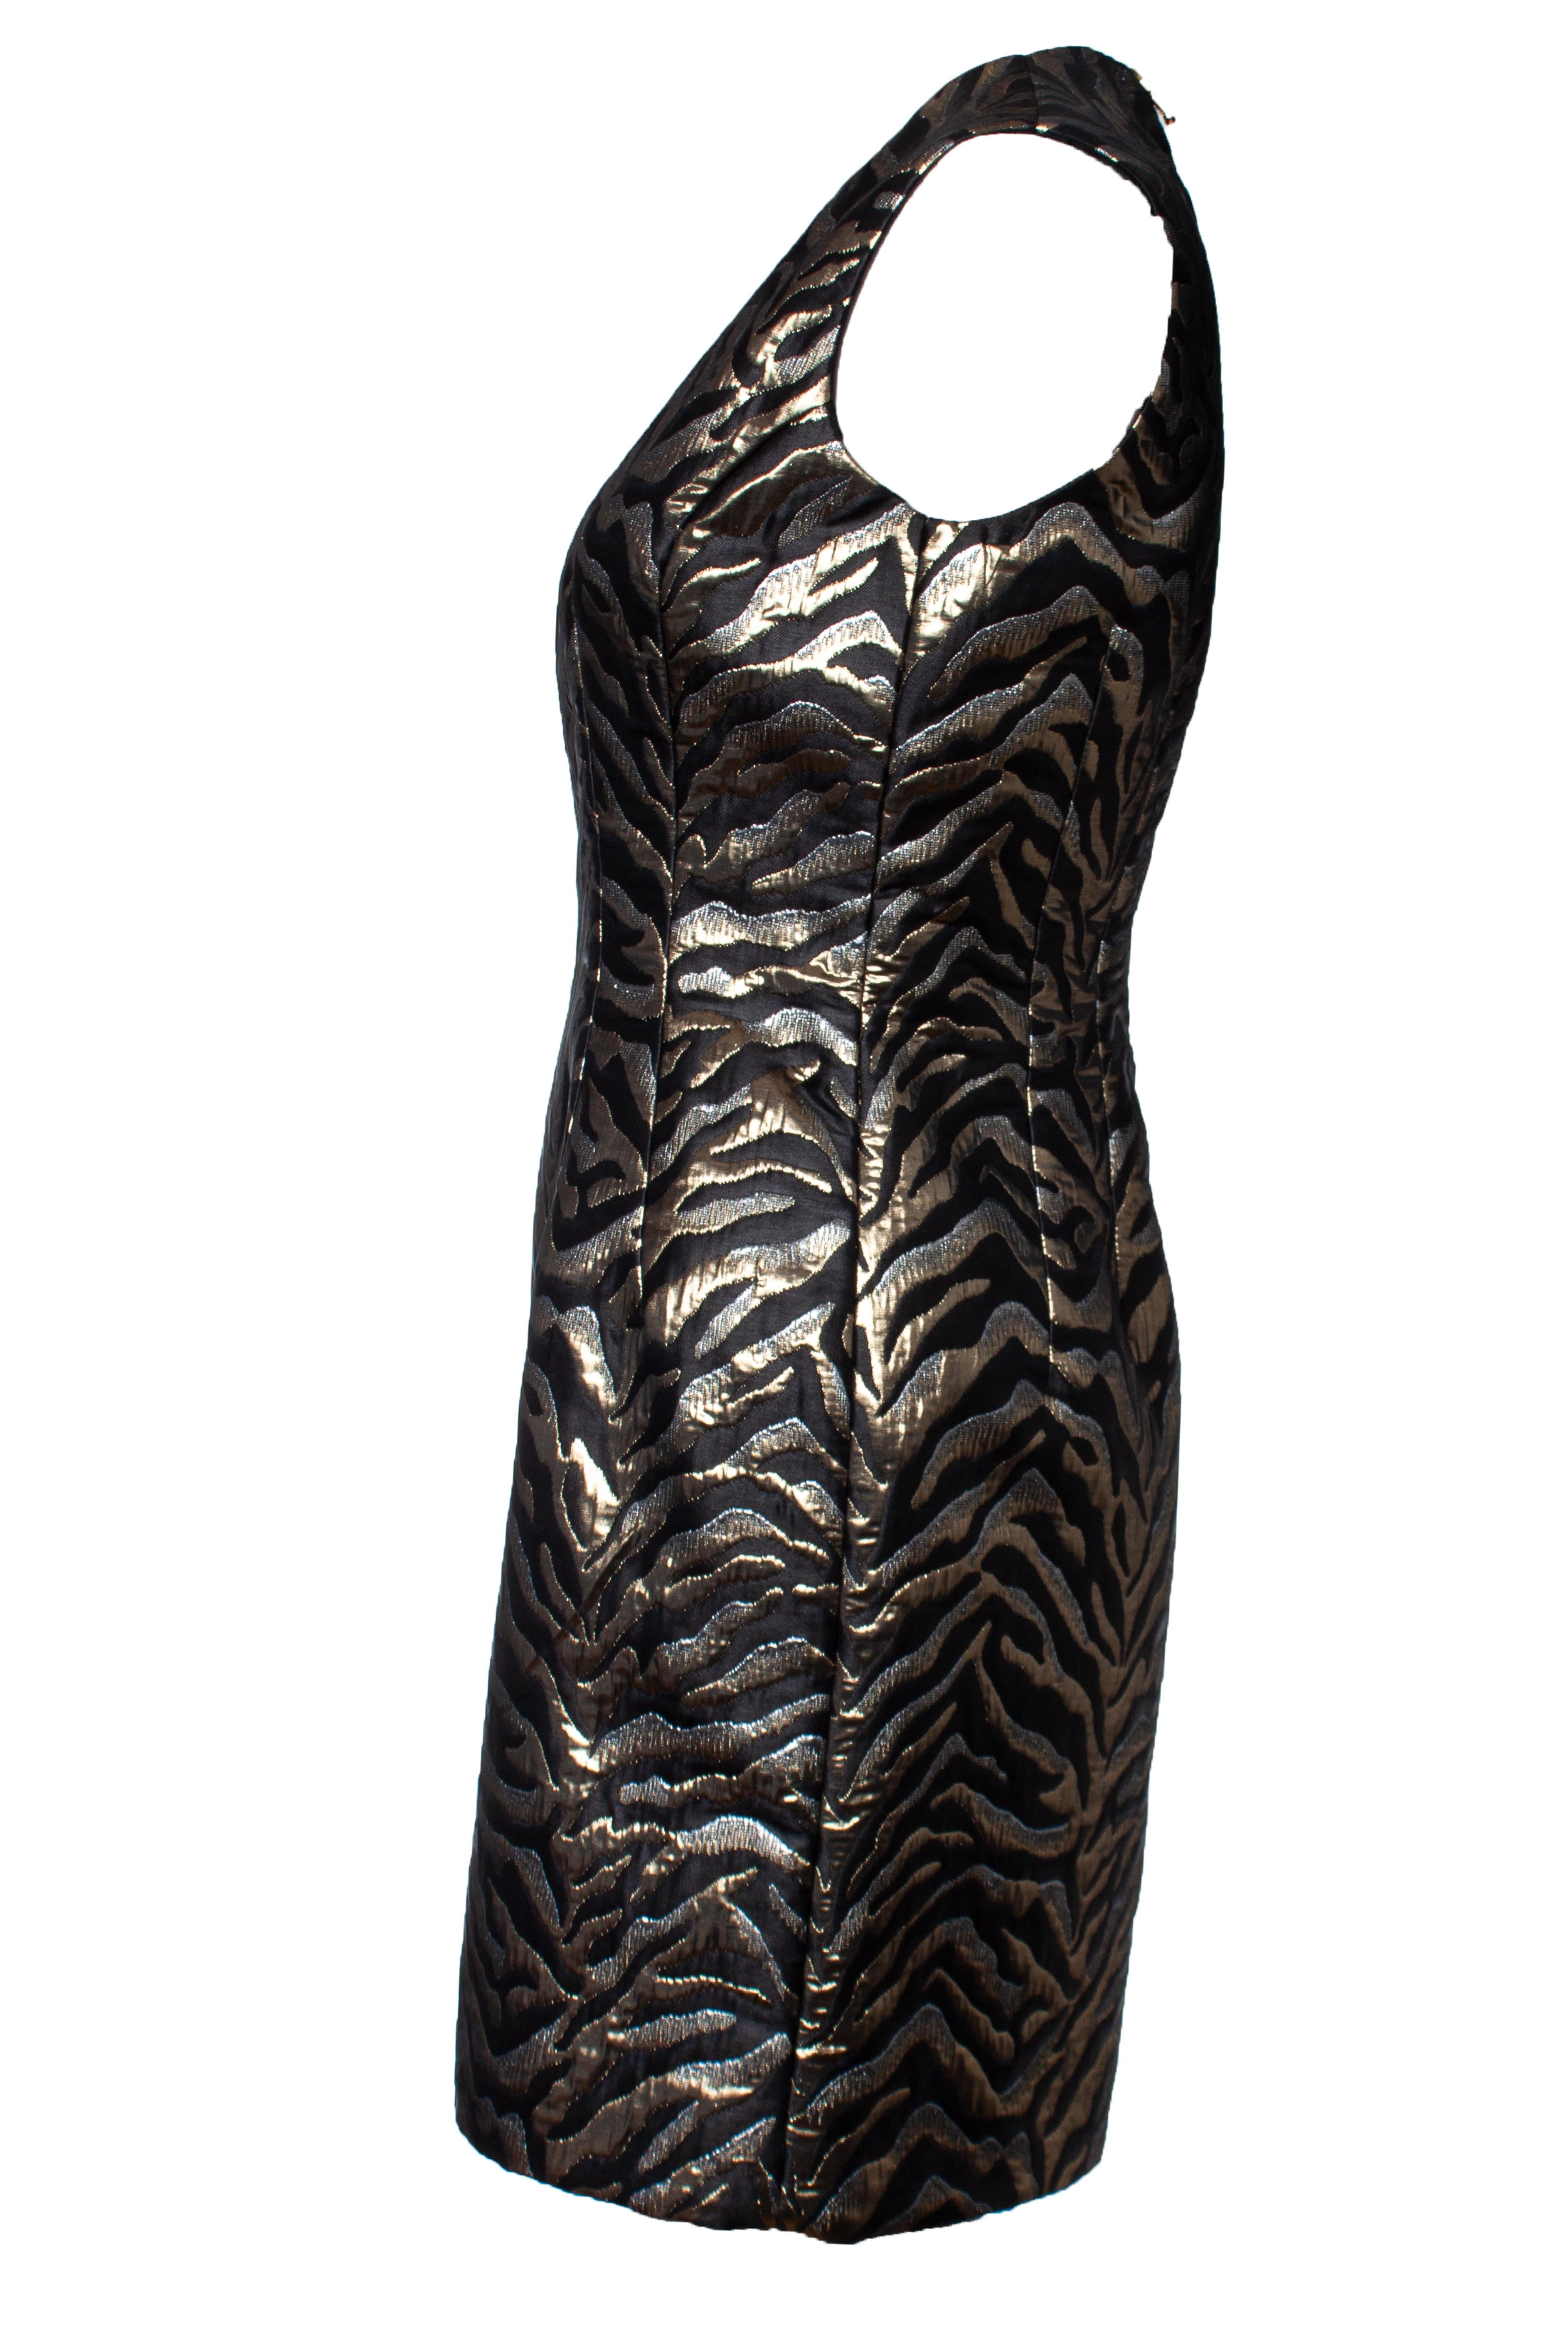 Roberto Cavalli, Lurex zebra printed dress In Excellent Condition For Sale In AMSTERDAM, NL